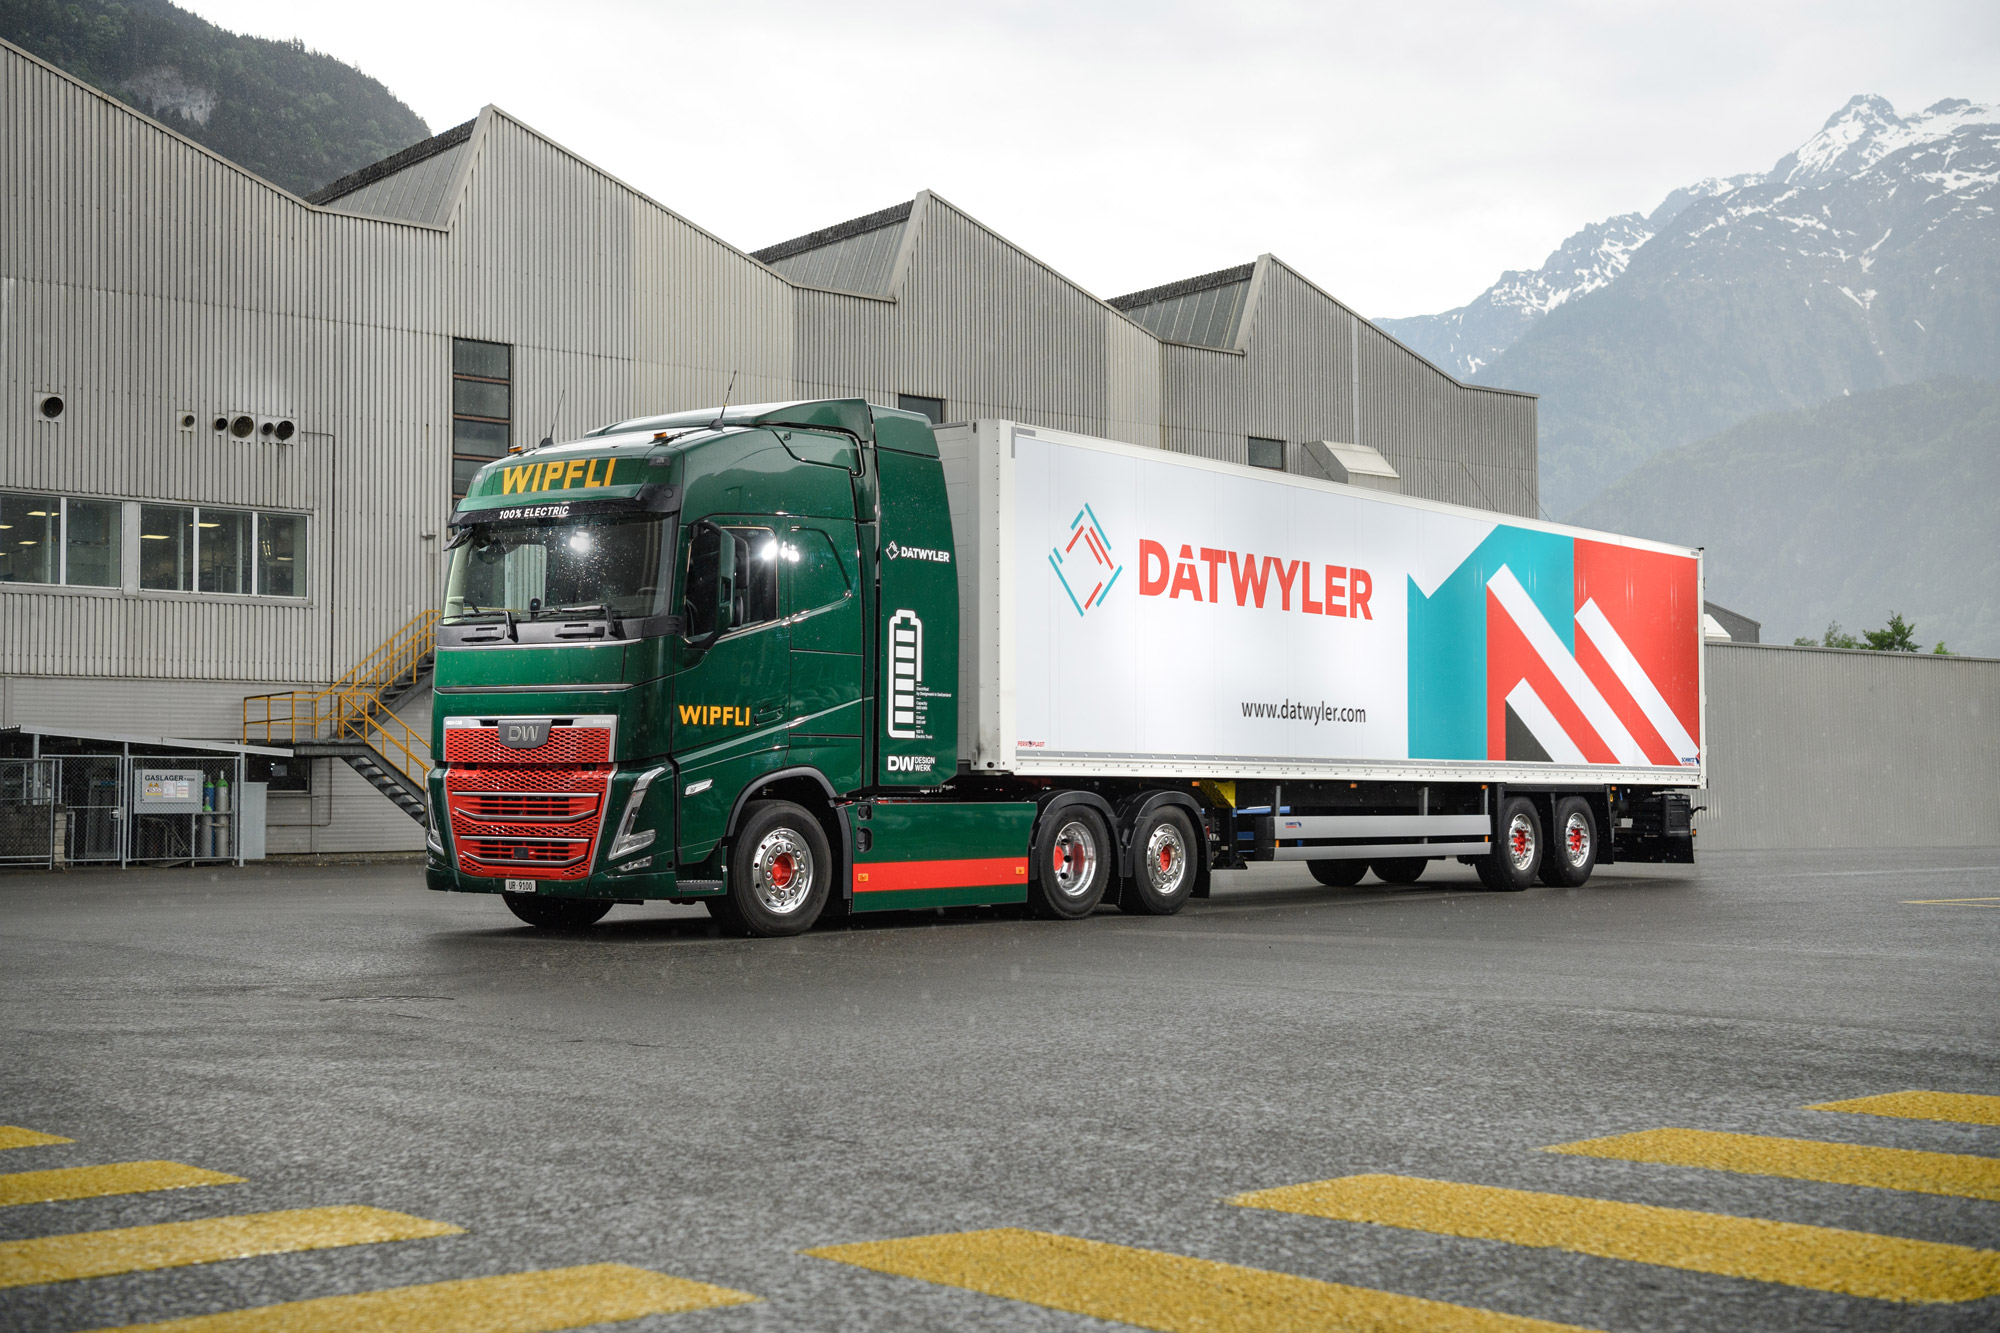 E-trucks on the road for Datwyler.